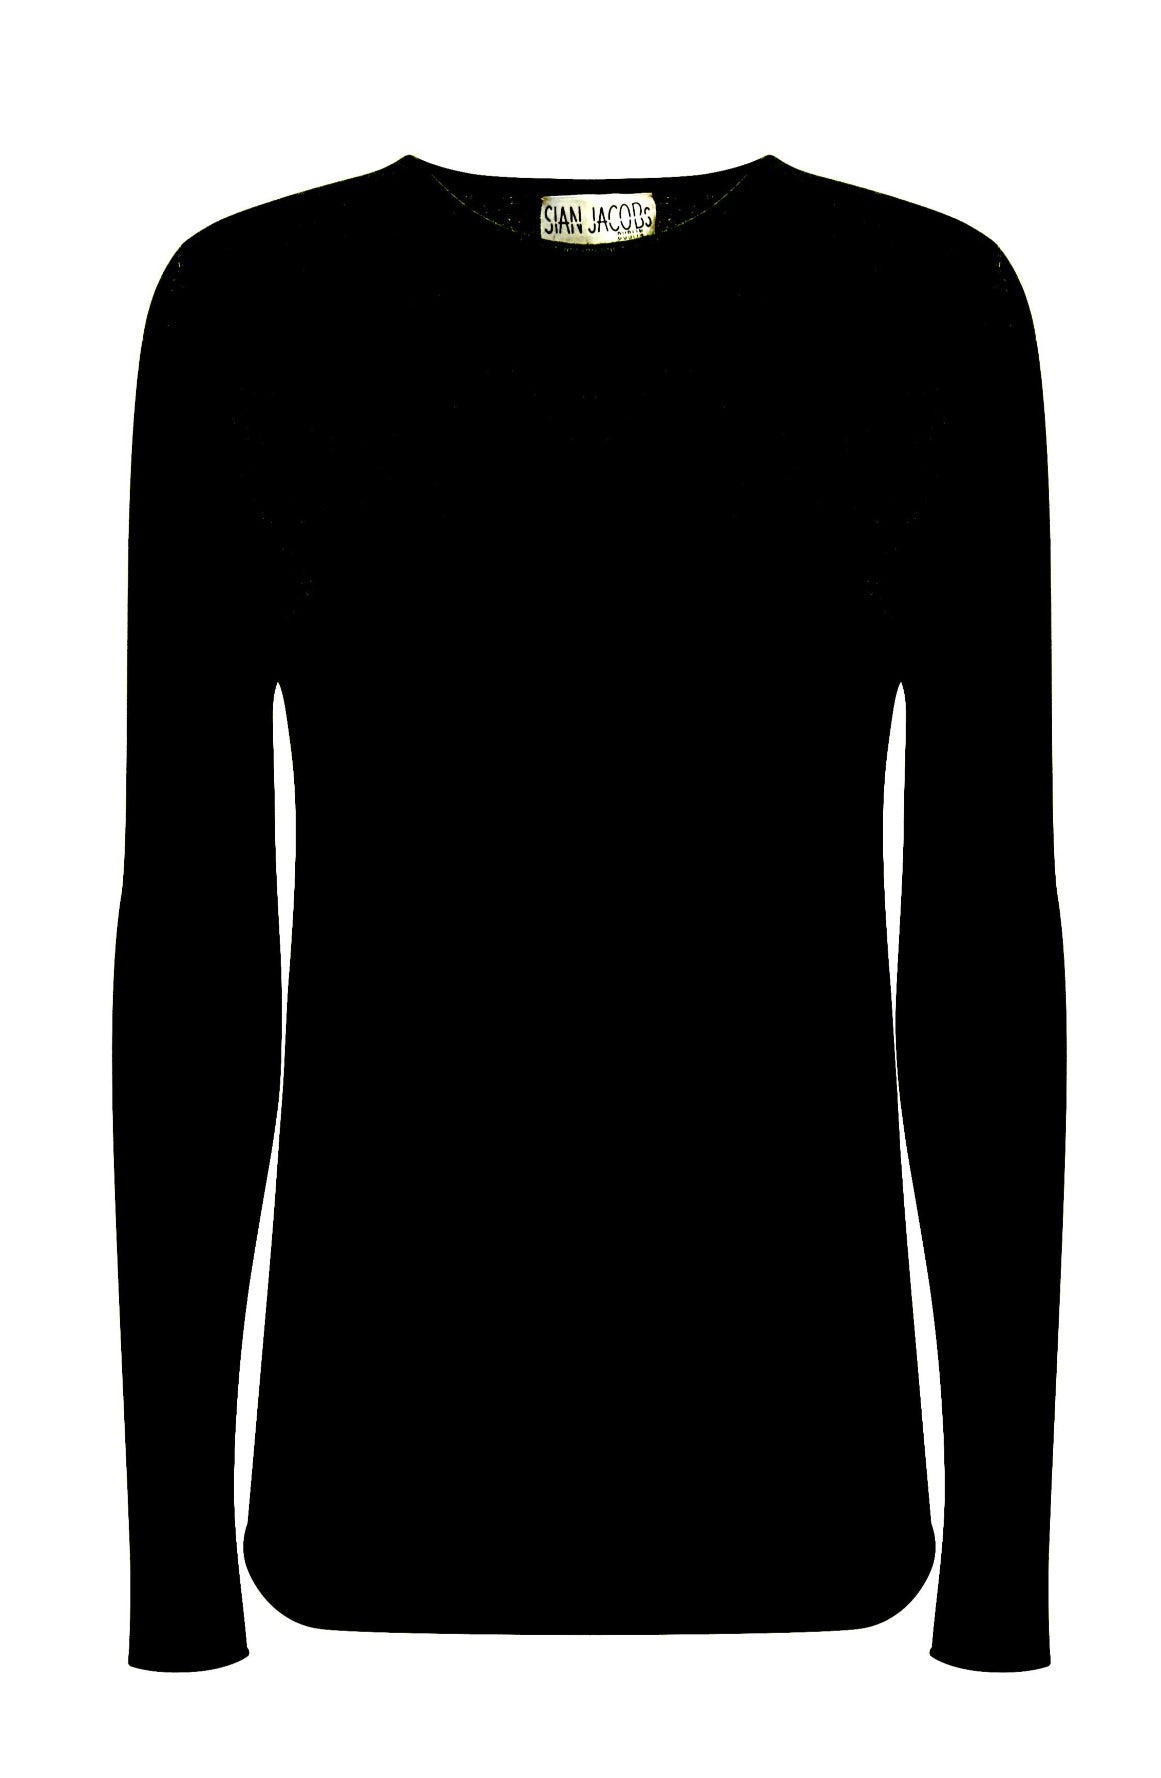 Richielu sweater 2 with shoulder cut outs